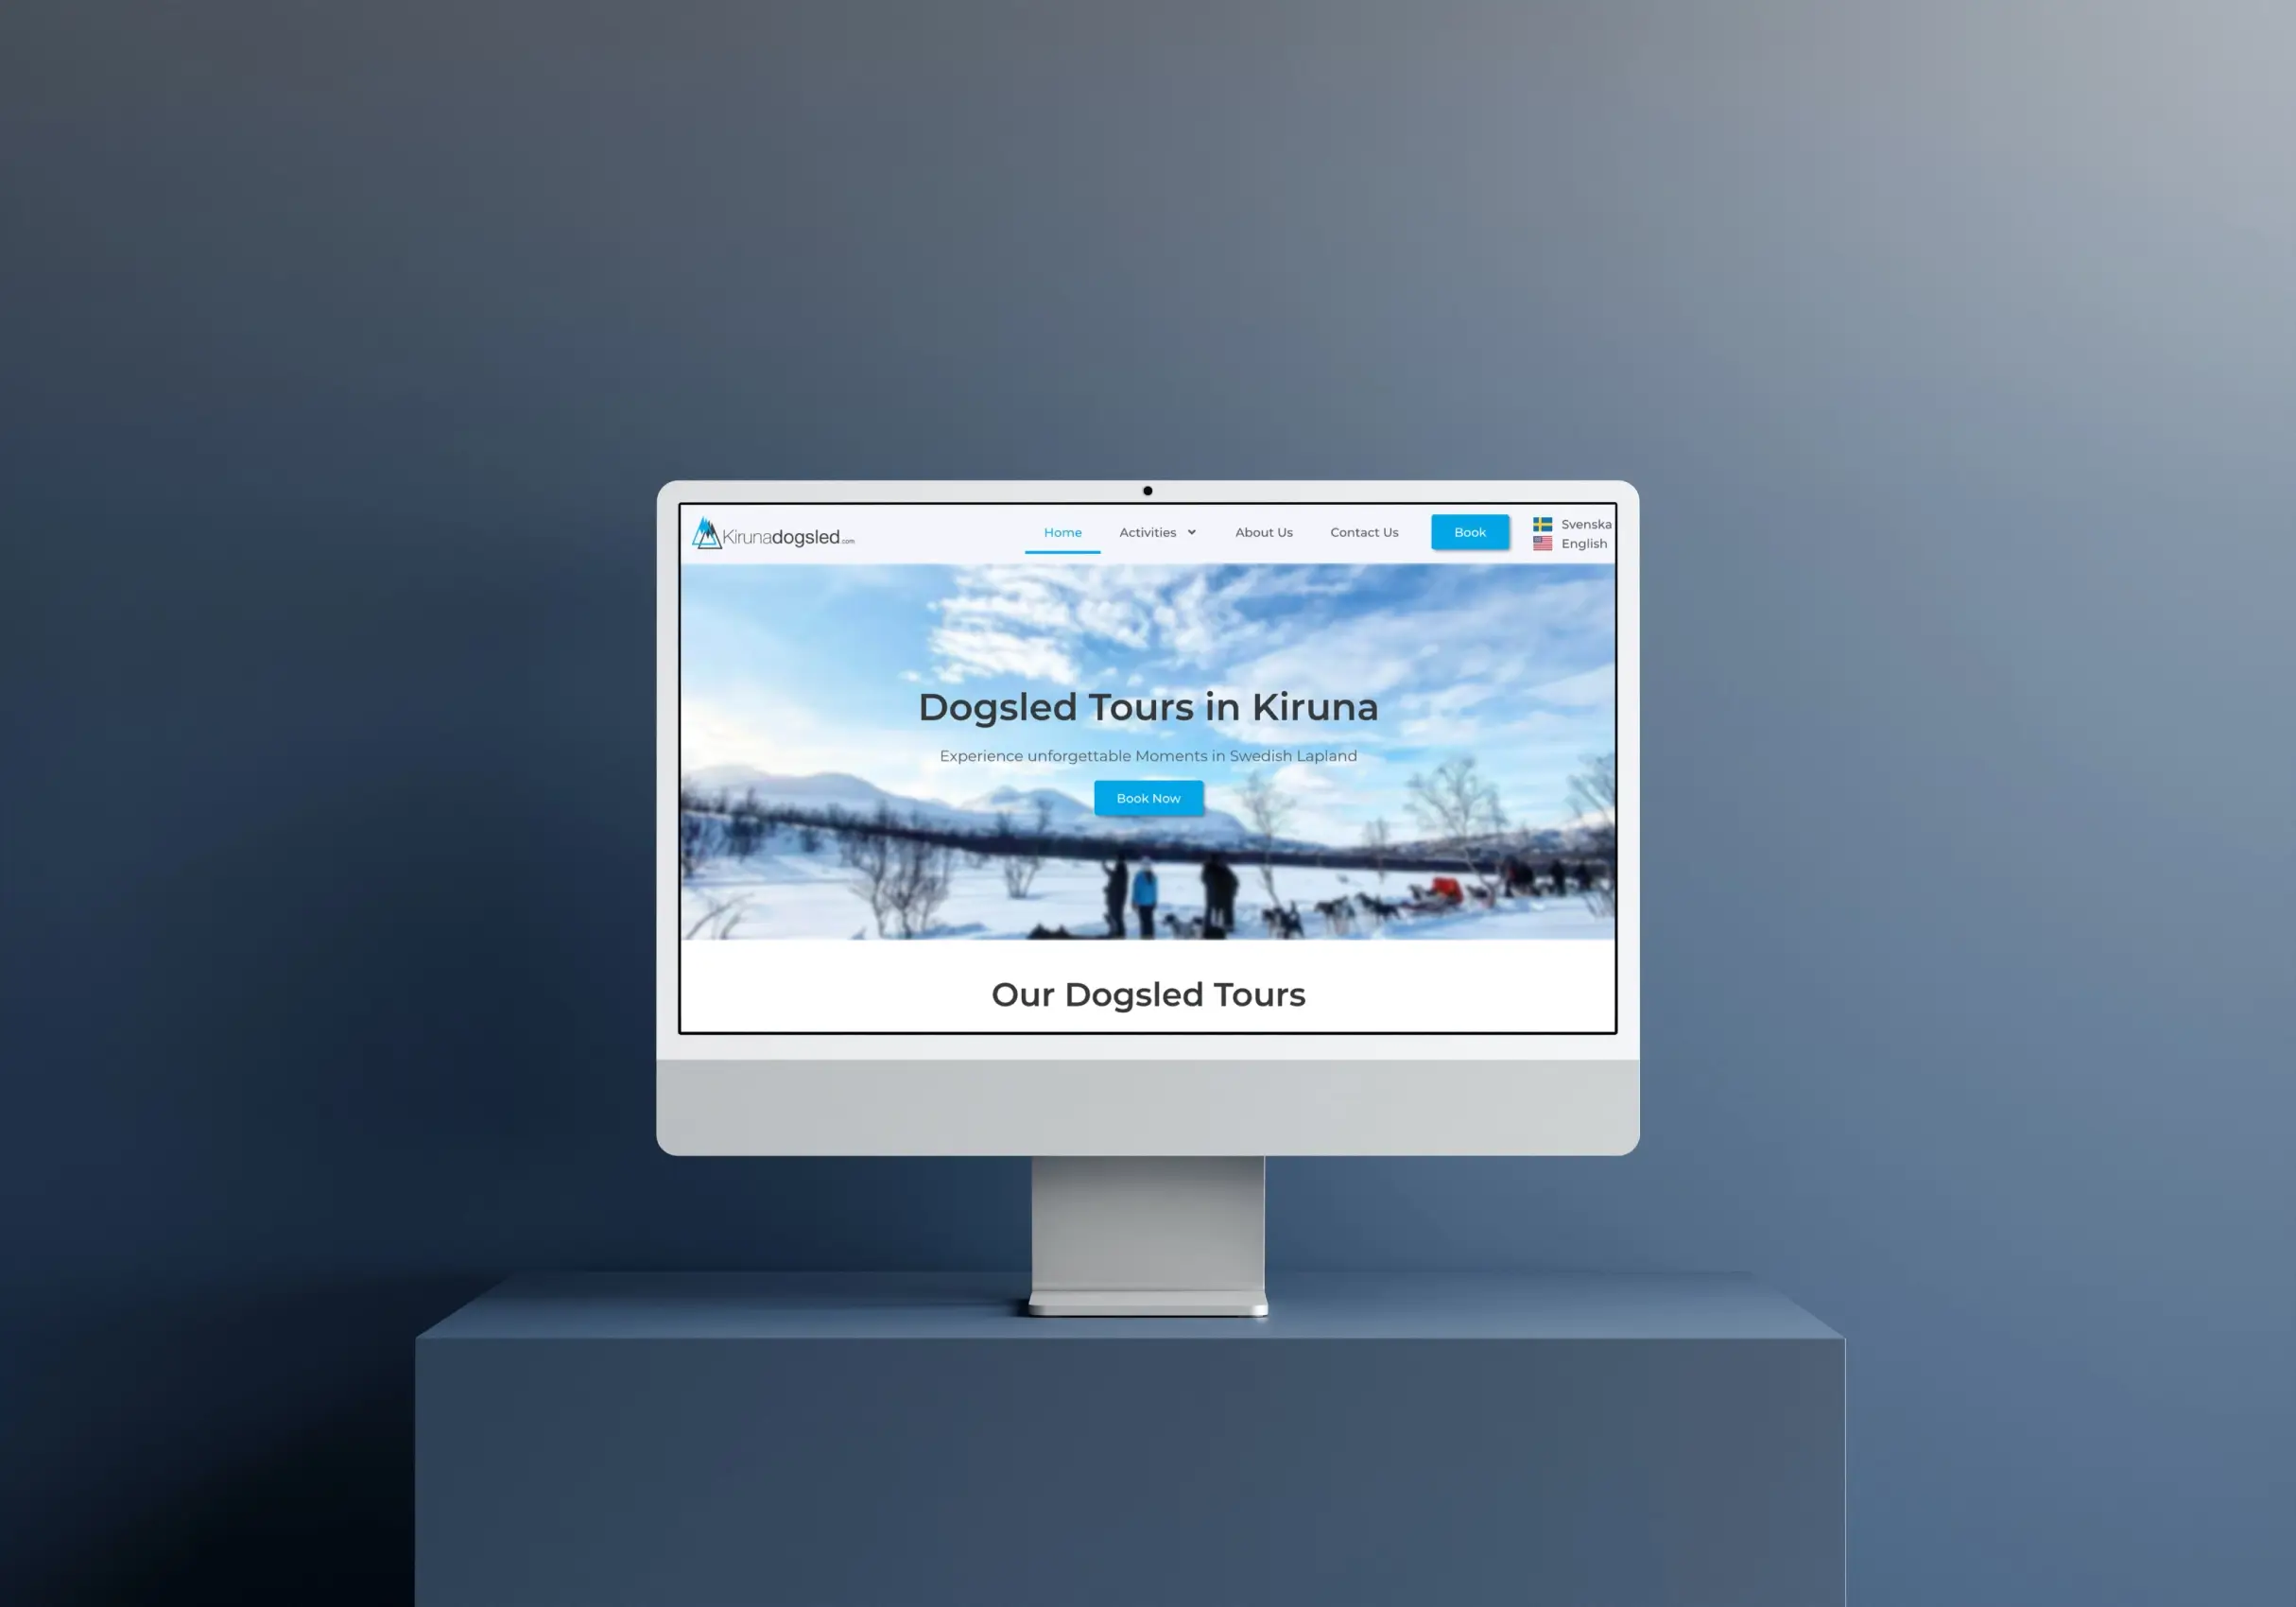 Silver iMac on the little box near the blue website